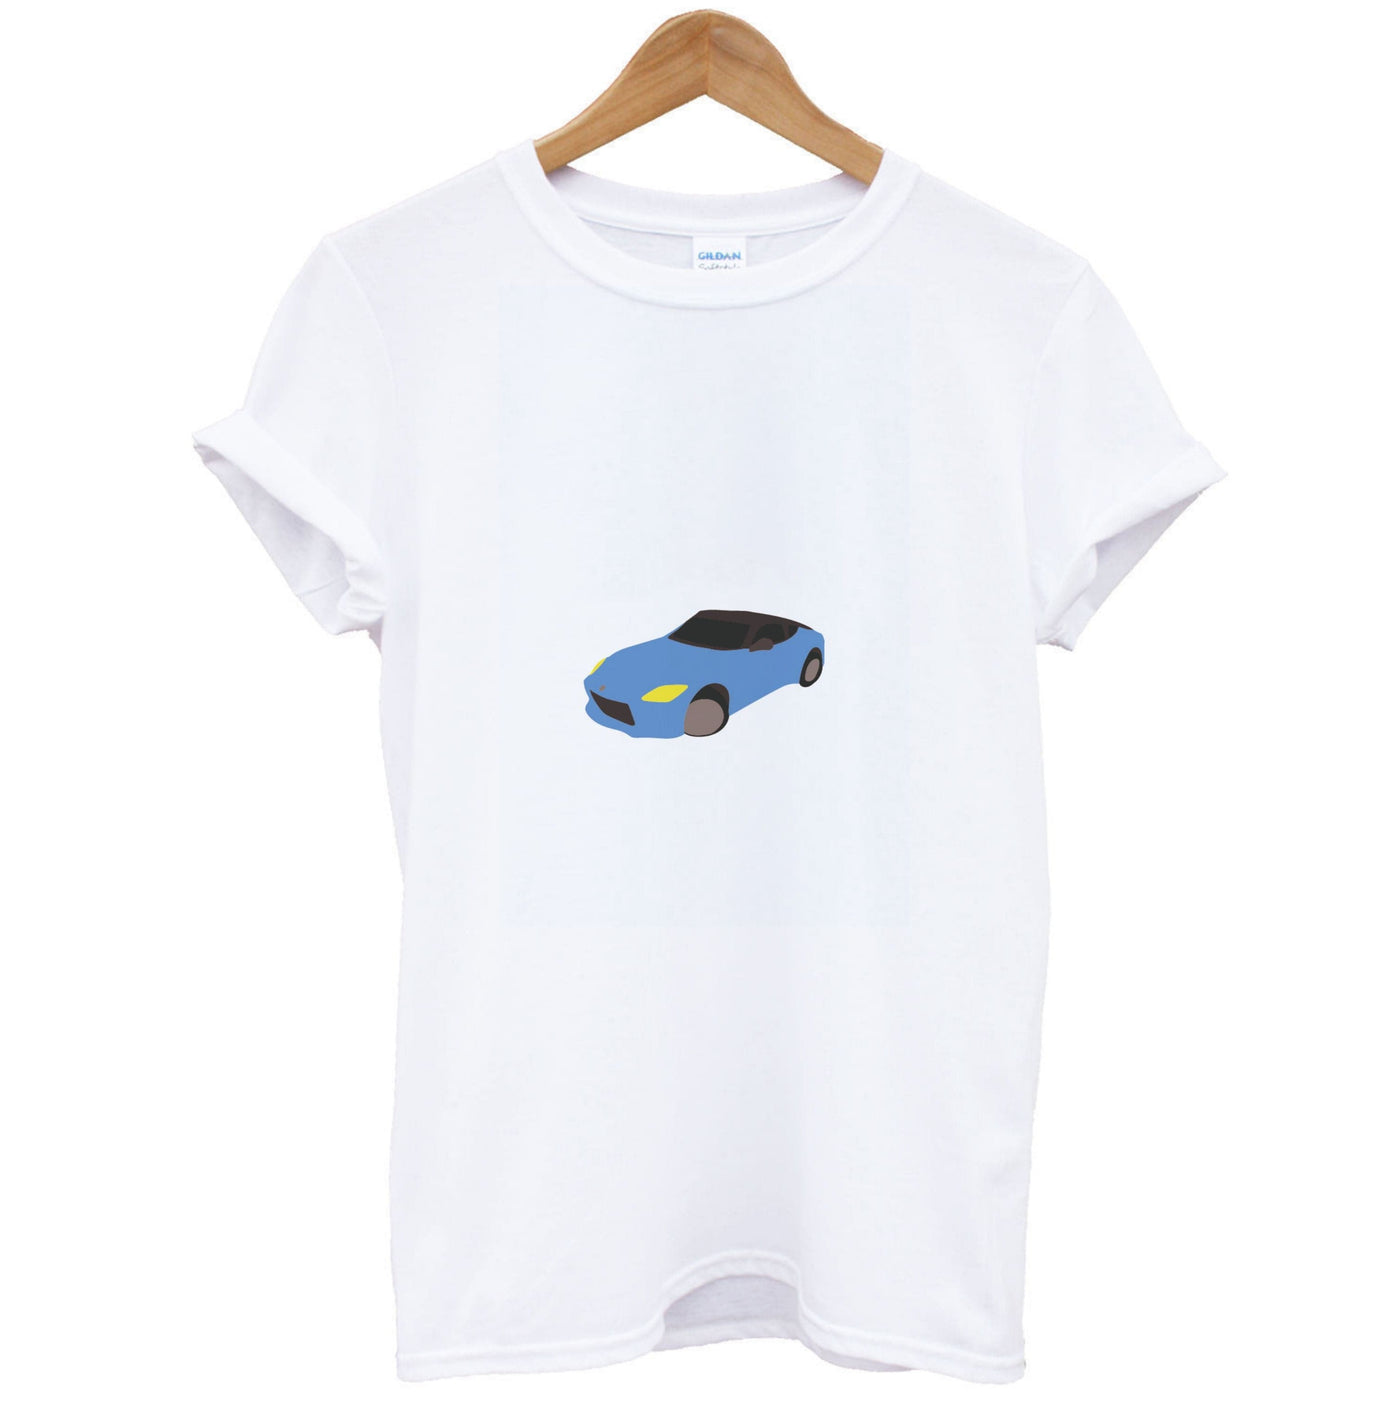 Komodo - Rocket League T-Shirt